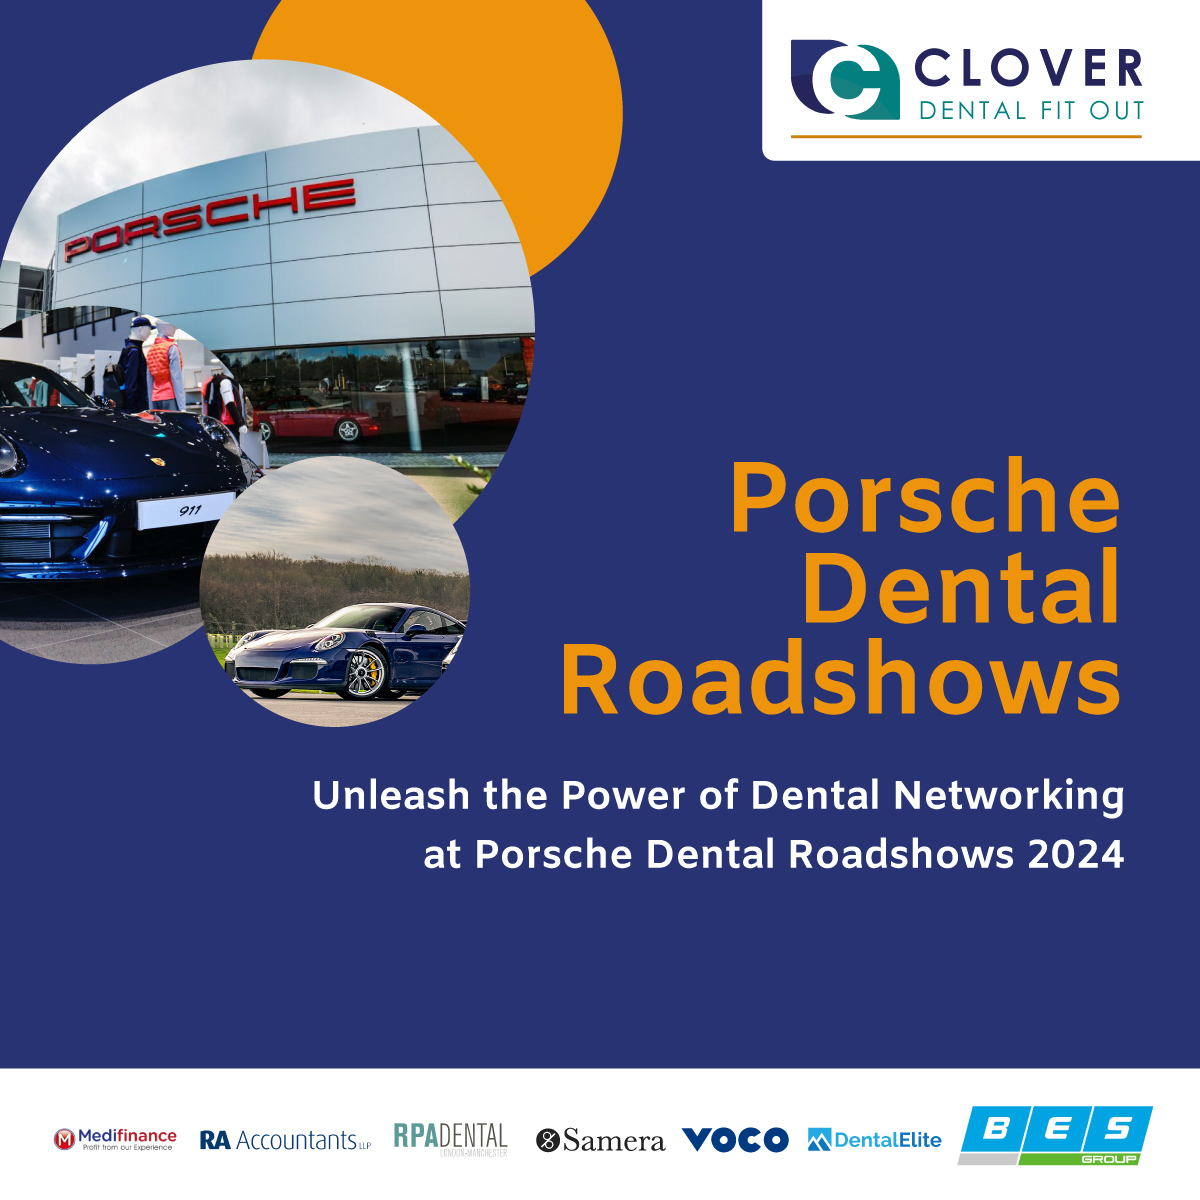 Porsche Dental Roadshow with RA Accountants sponsoring series